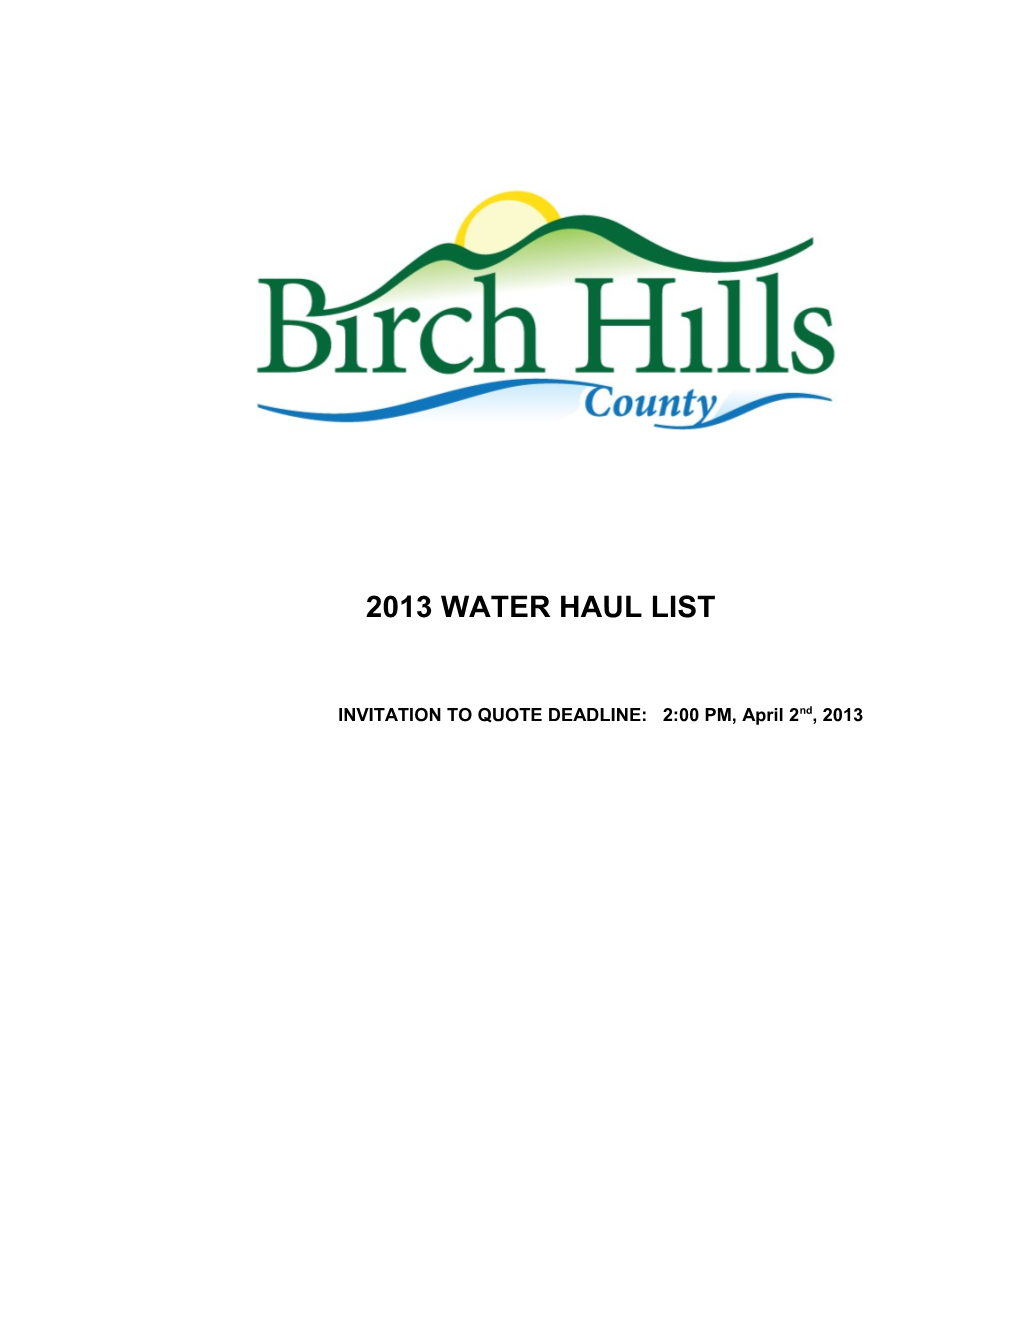 Birch Hills County